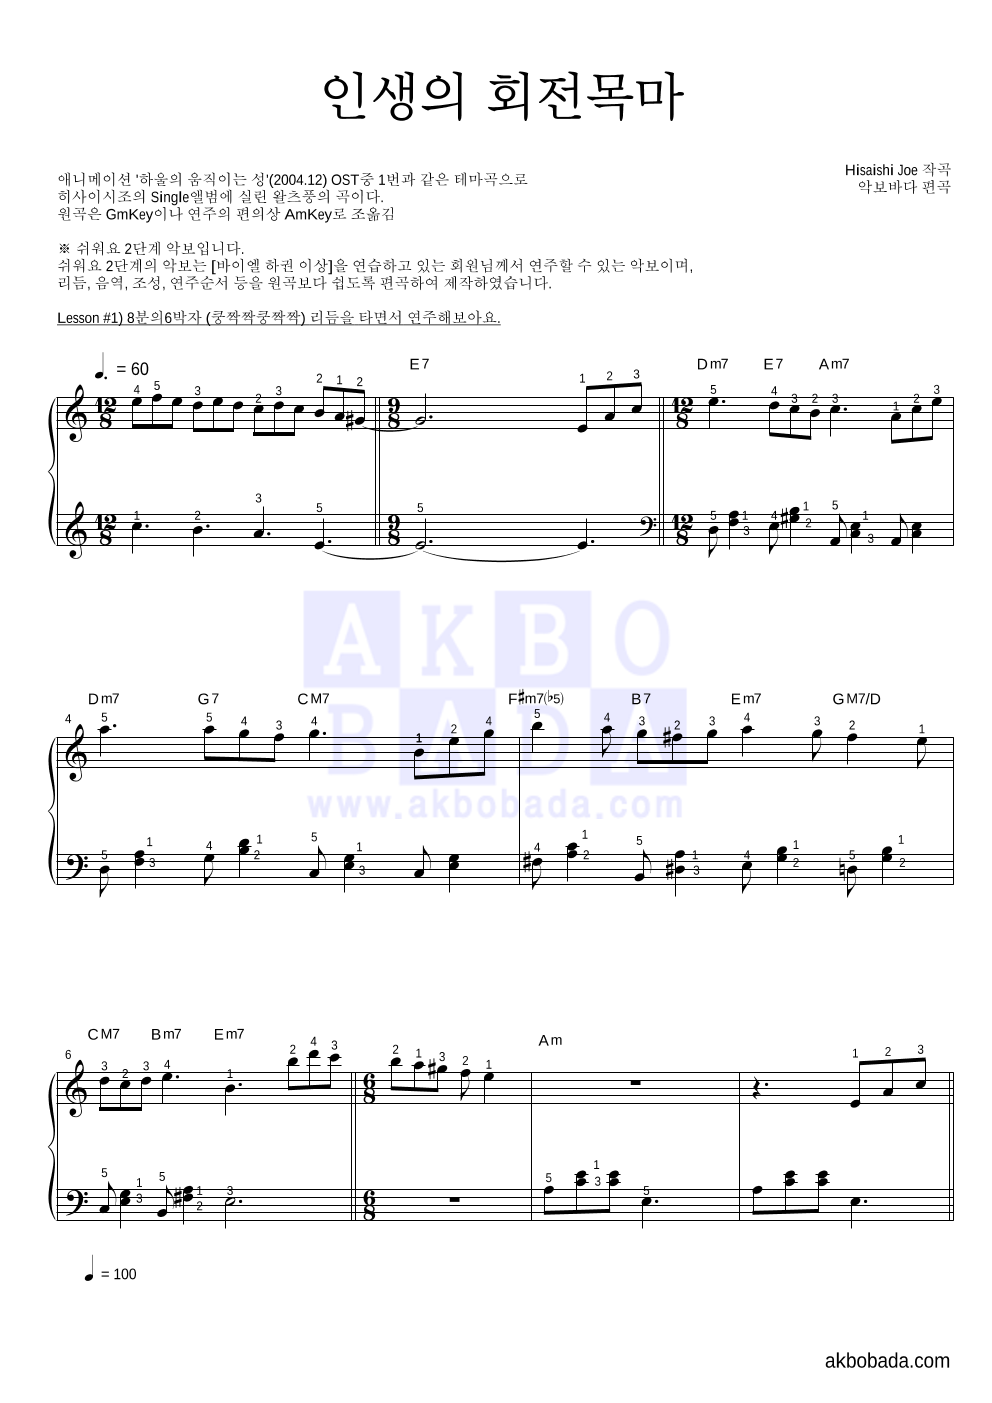 Hisaishi Joe - 인생의 회전목마 피아노2단-쉬워요 악보 